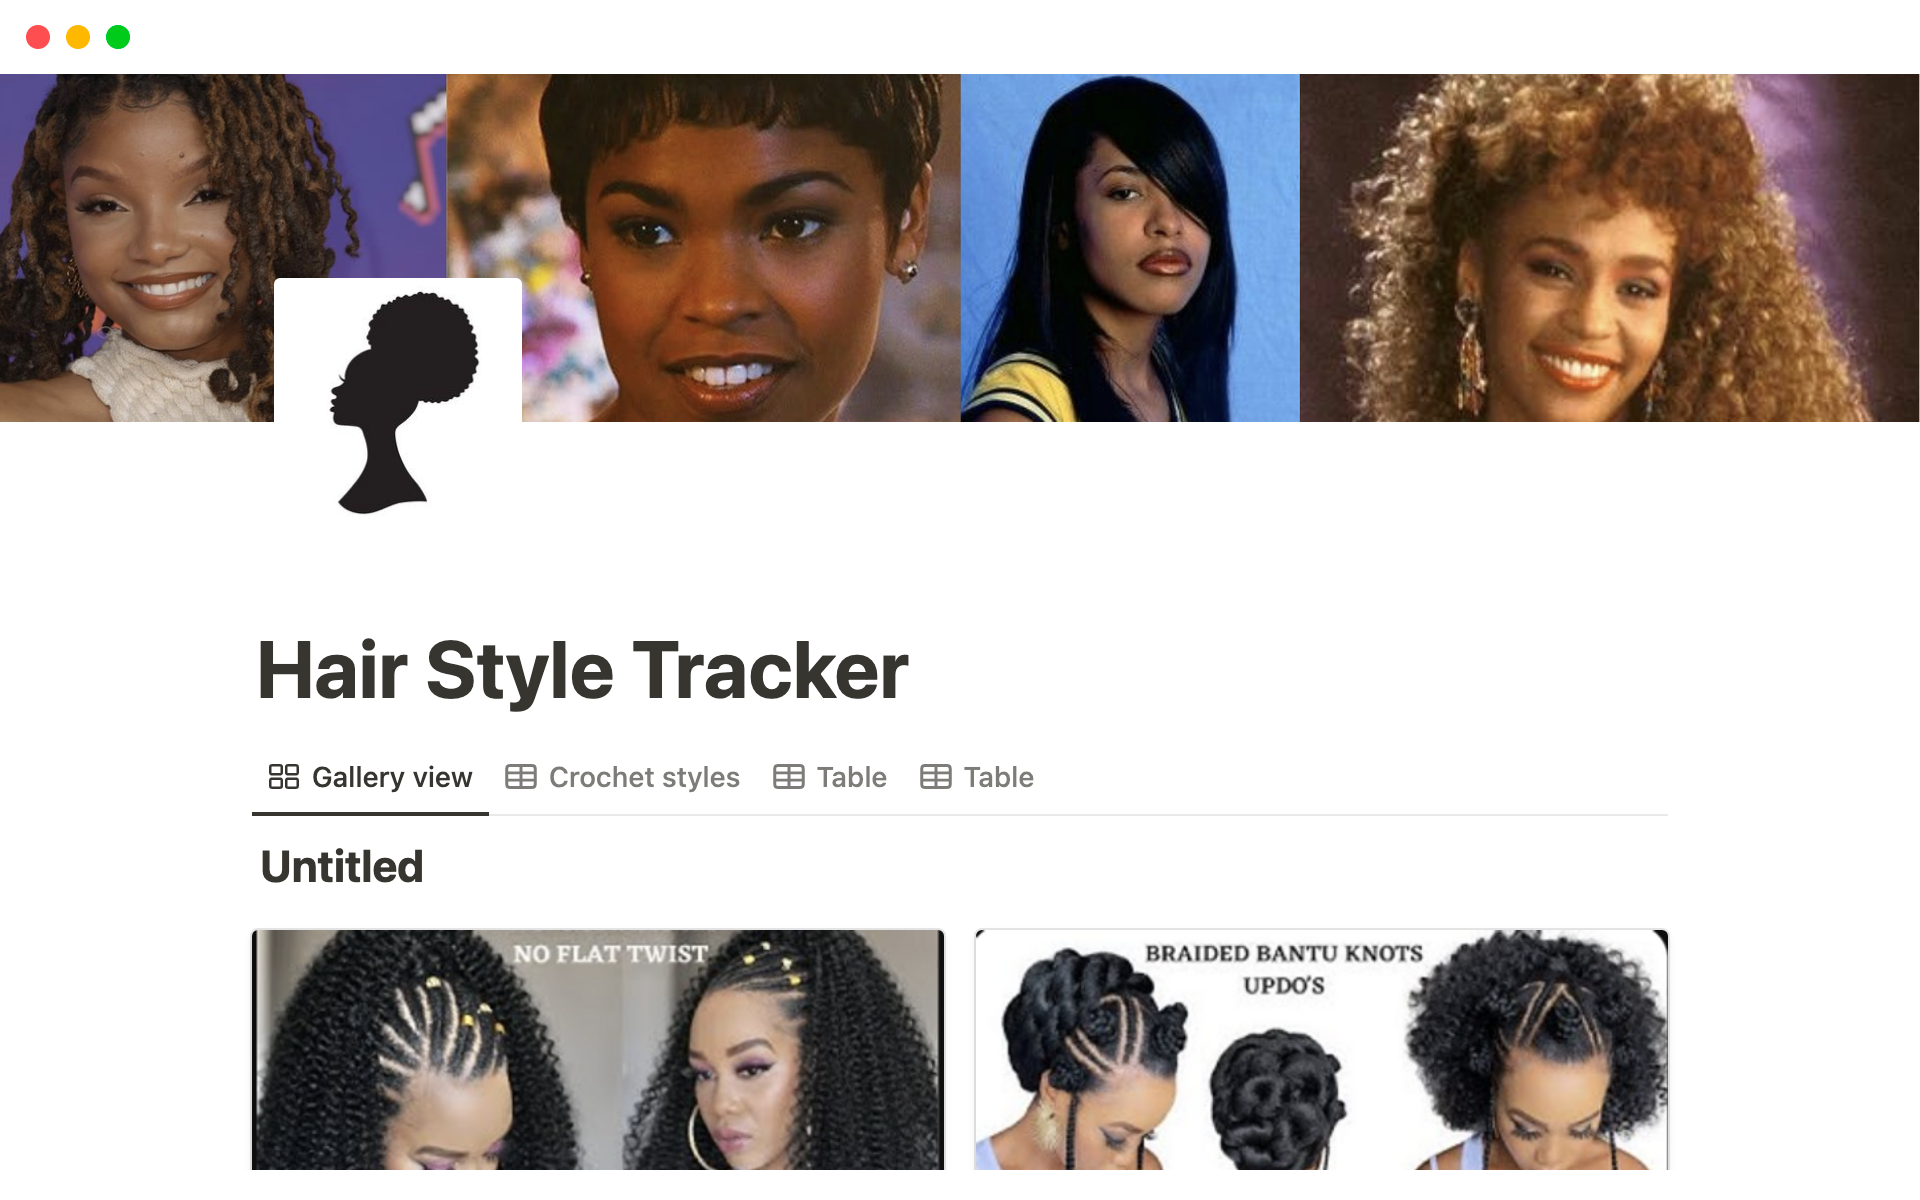 Aperçu du modèle de Hair Style Tracker